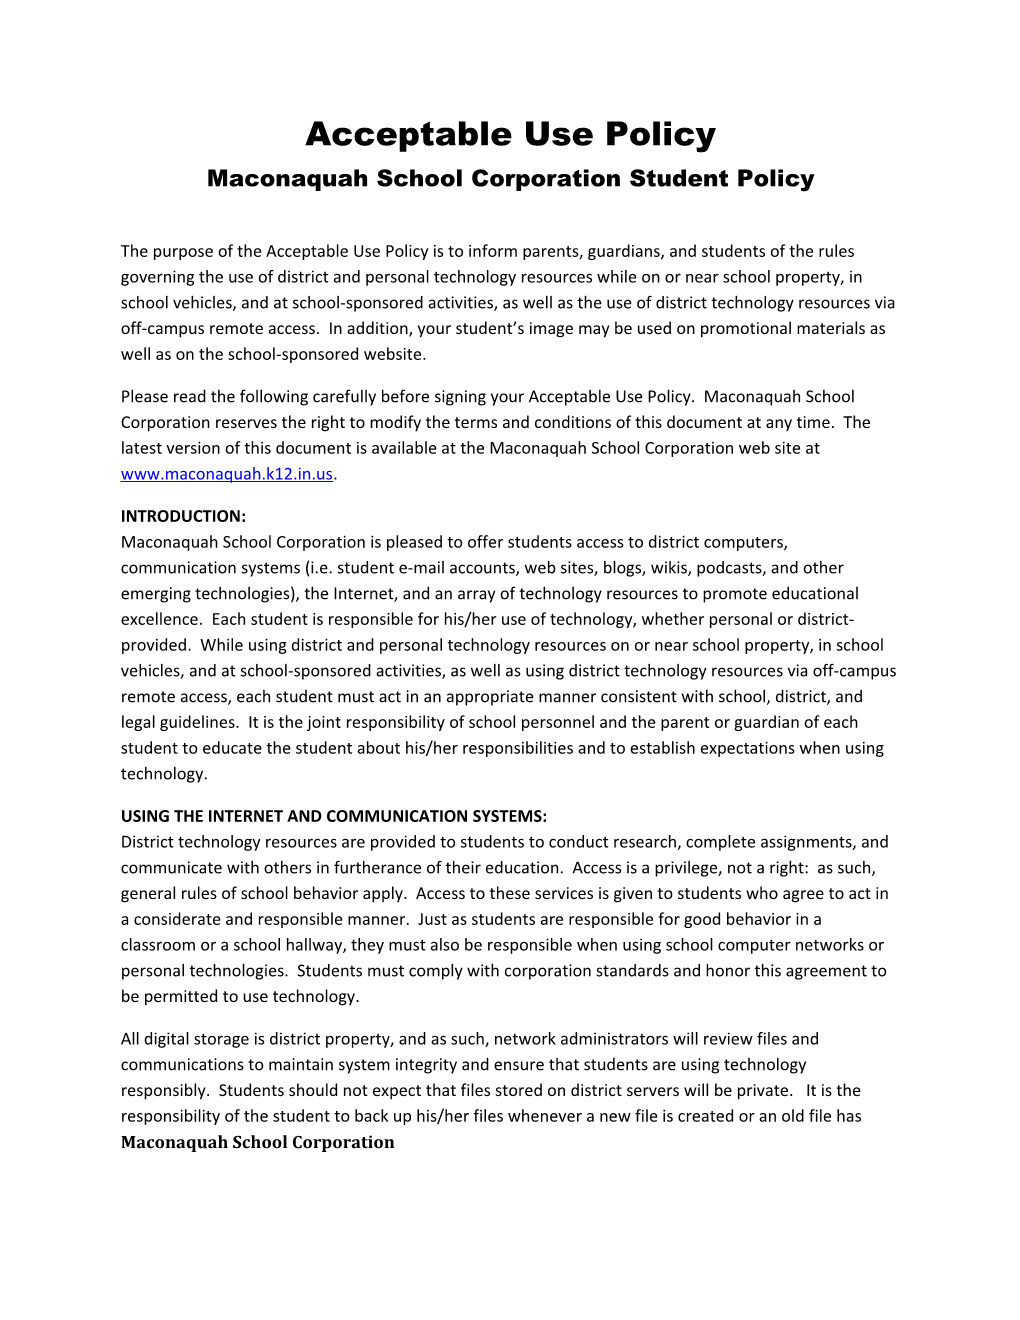 Acceptable Use Policy Maconaquah School Corporationstudent Policy